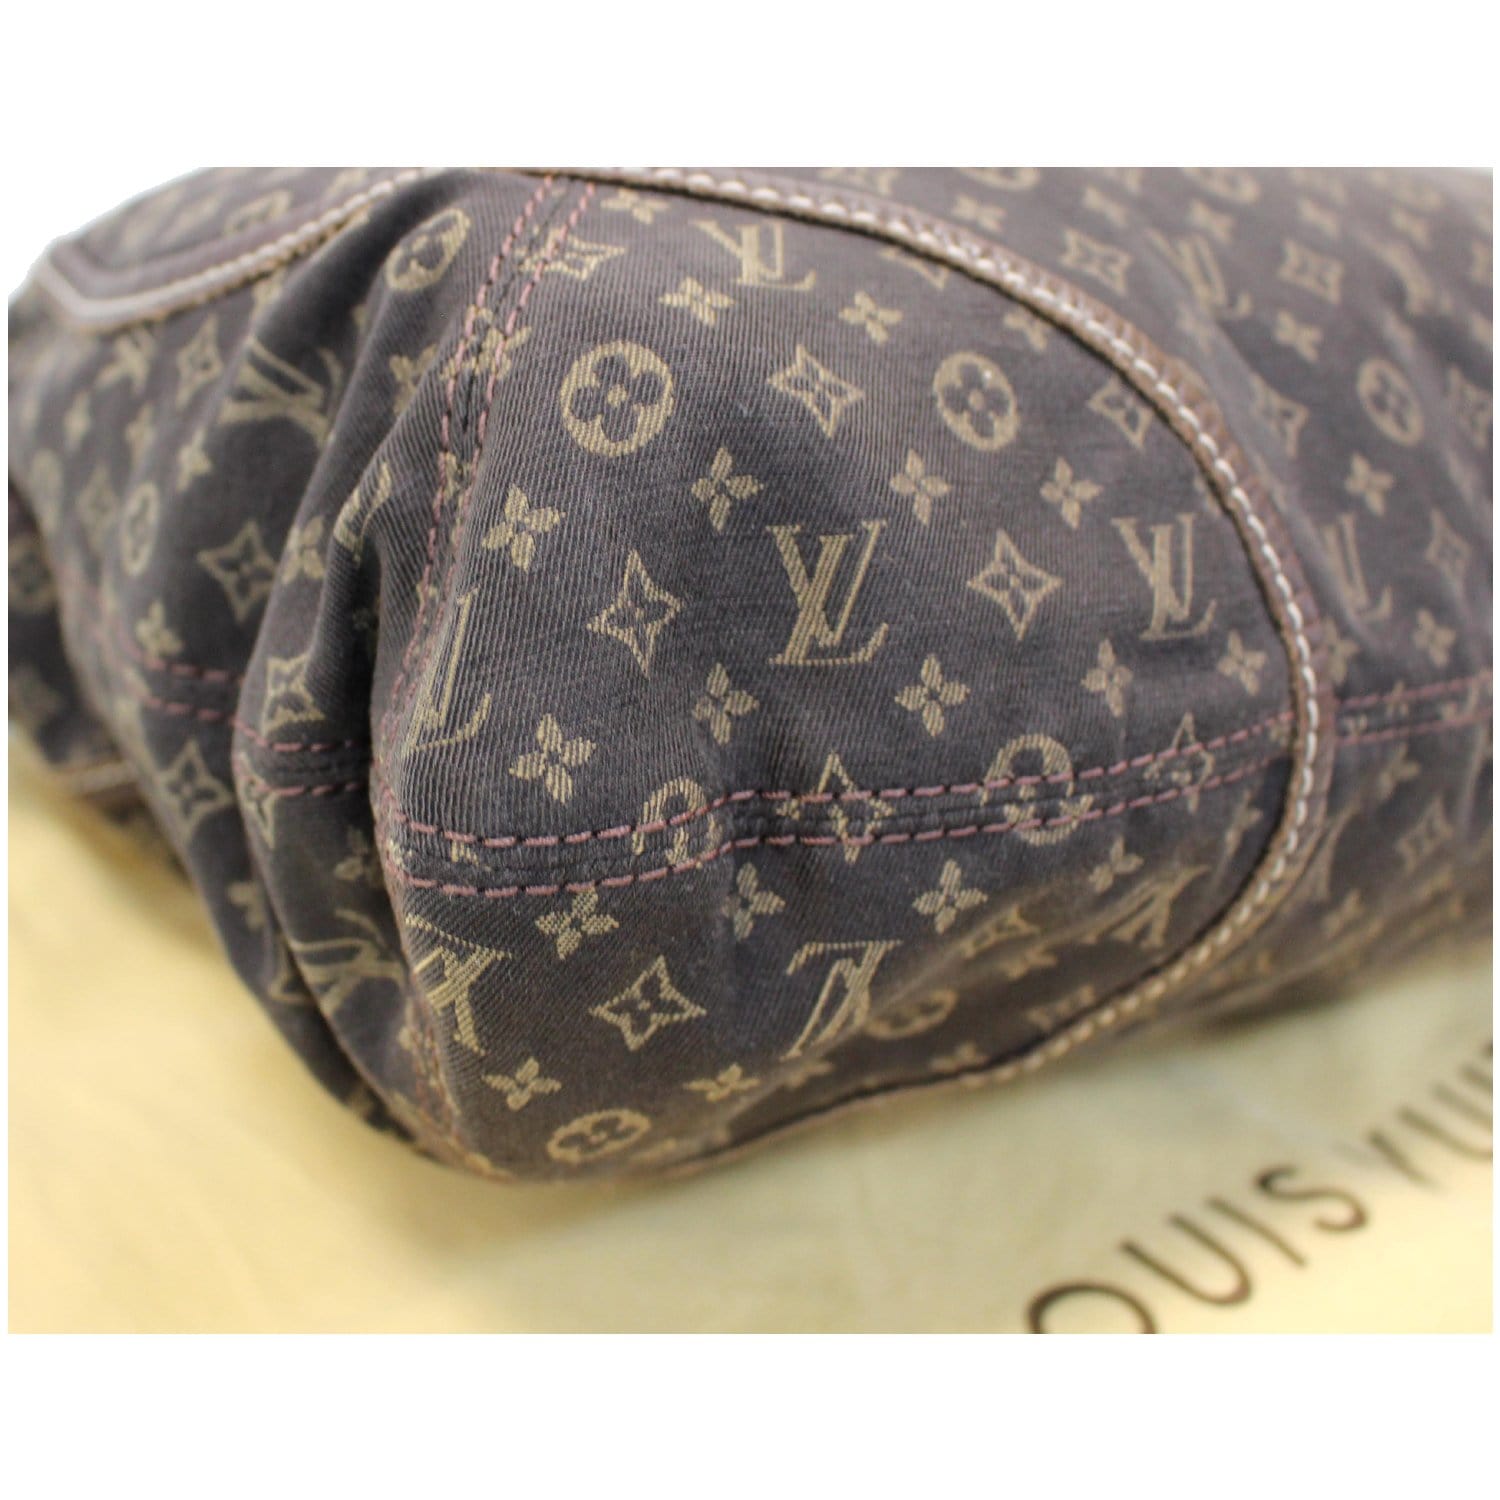 Louis Vuitton Neverfull MM Black Mini Lin Tote Shopper bag